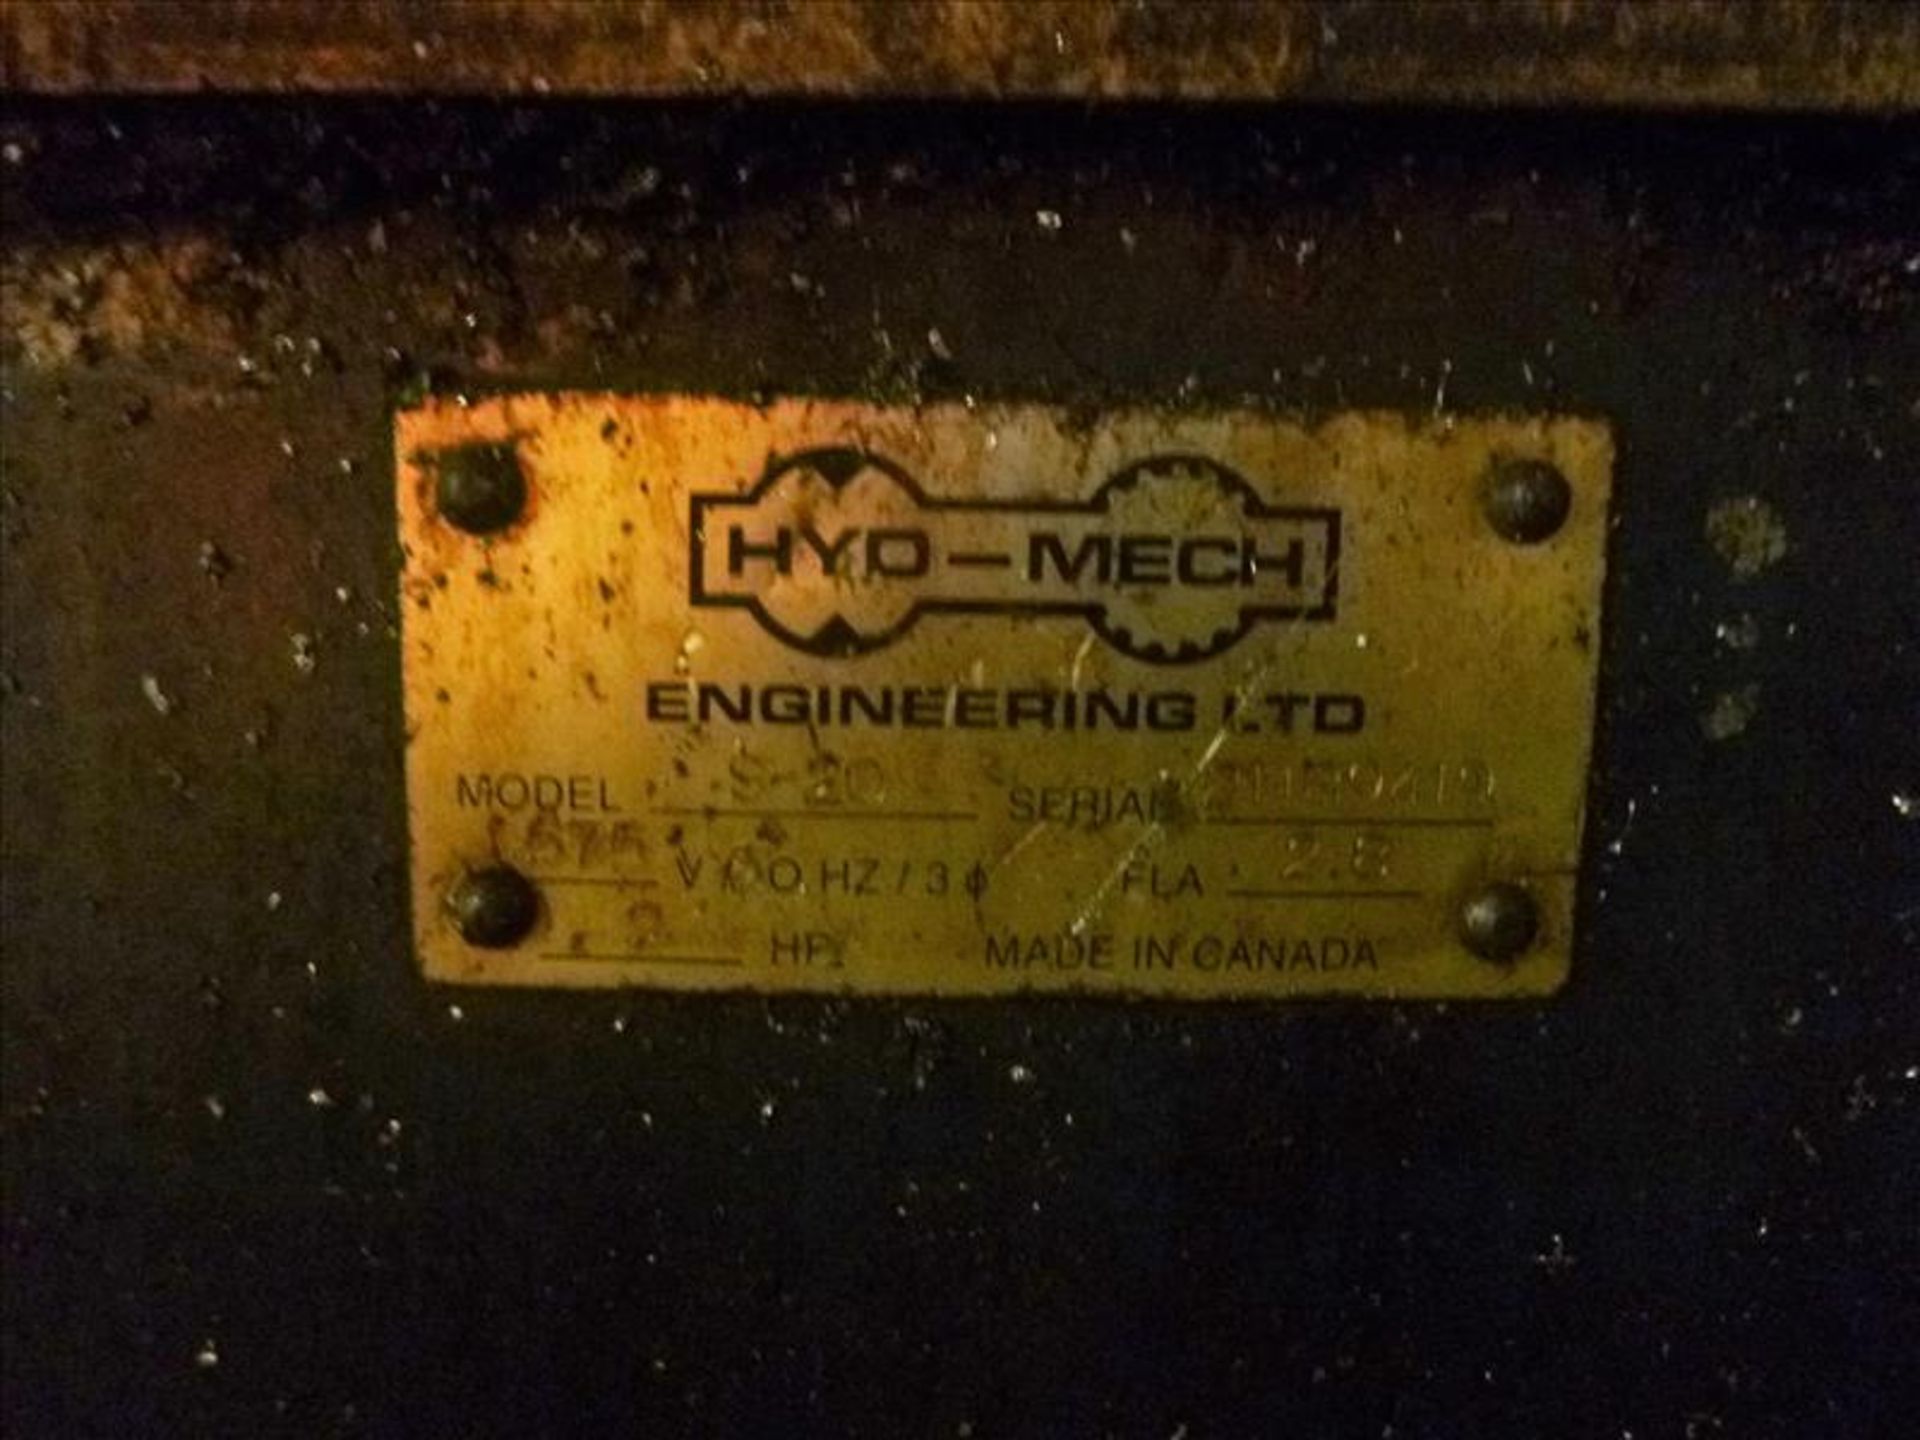 Hyd-Mech horizontal band saw, mod. S-20, ser. no. 21189419, 2 hp c/w exit conveyor [Machine Shop, - Image 4 of 4